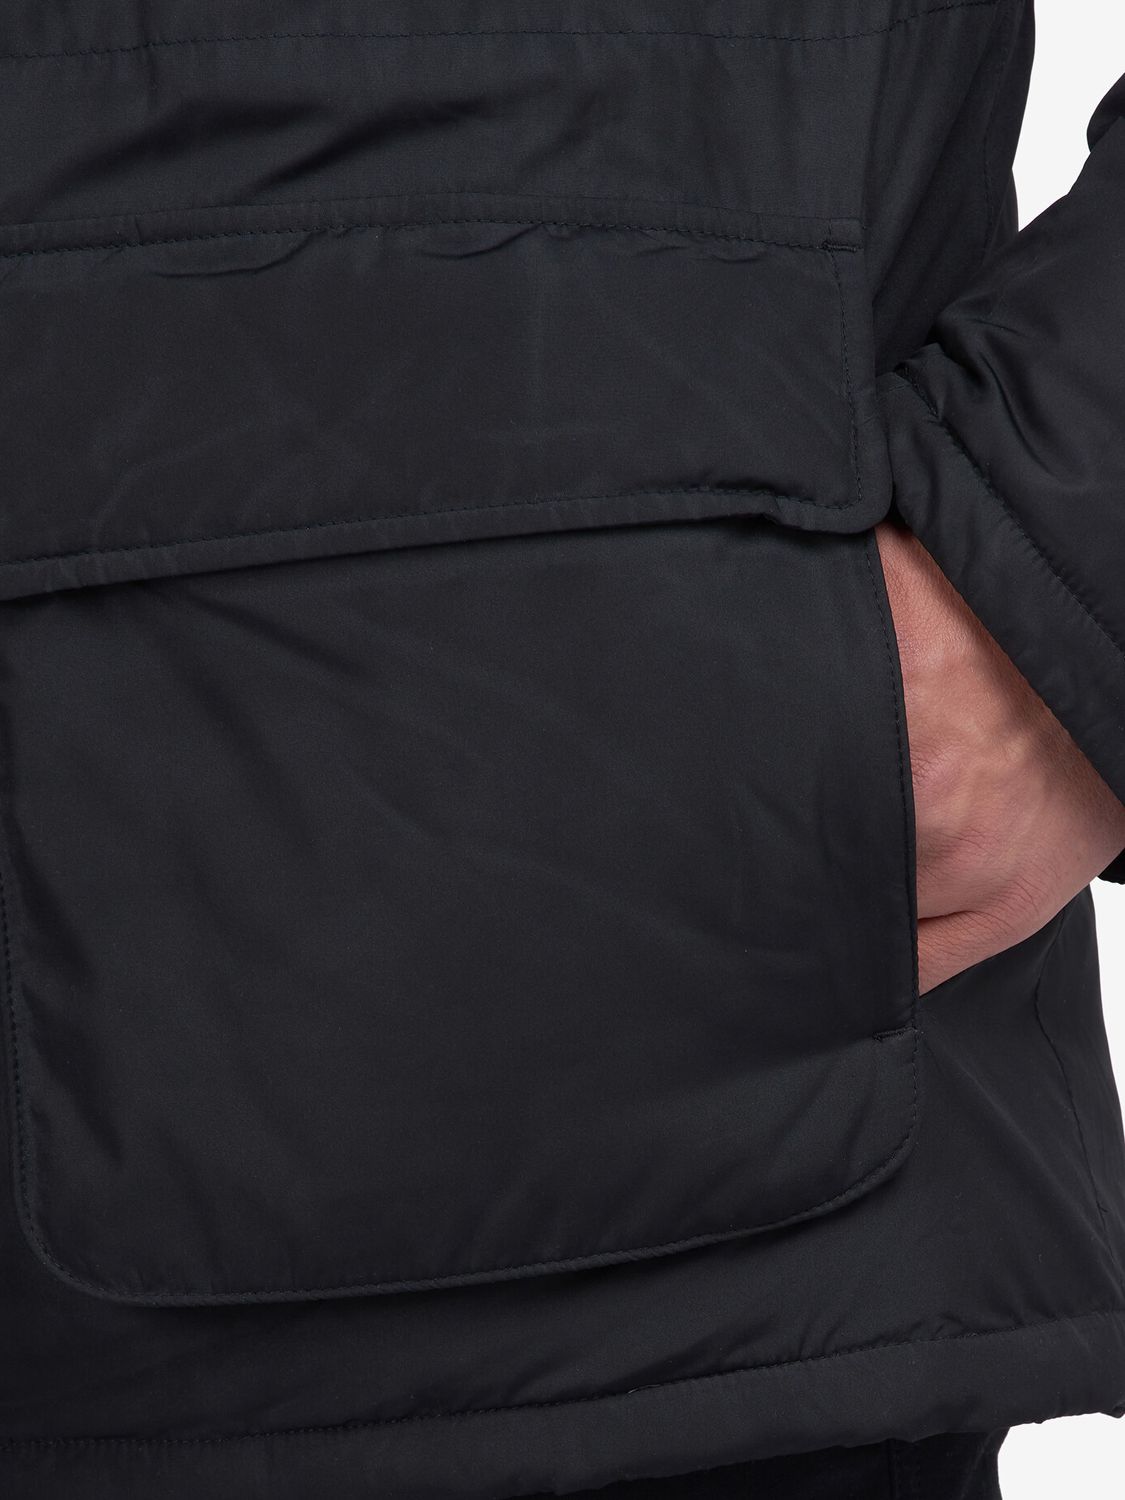 Barbour International Arden Quilted Jacket, Black at John Lewis & Partners